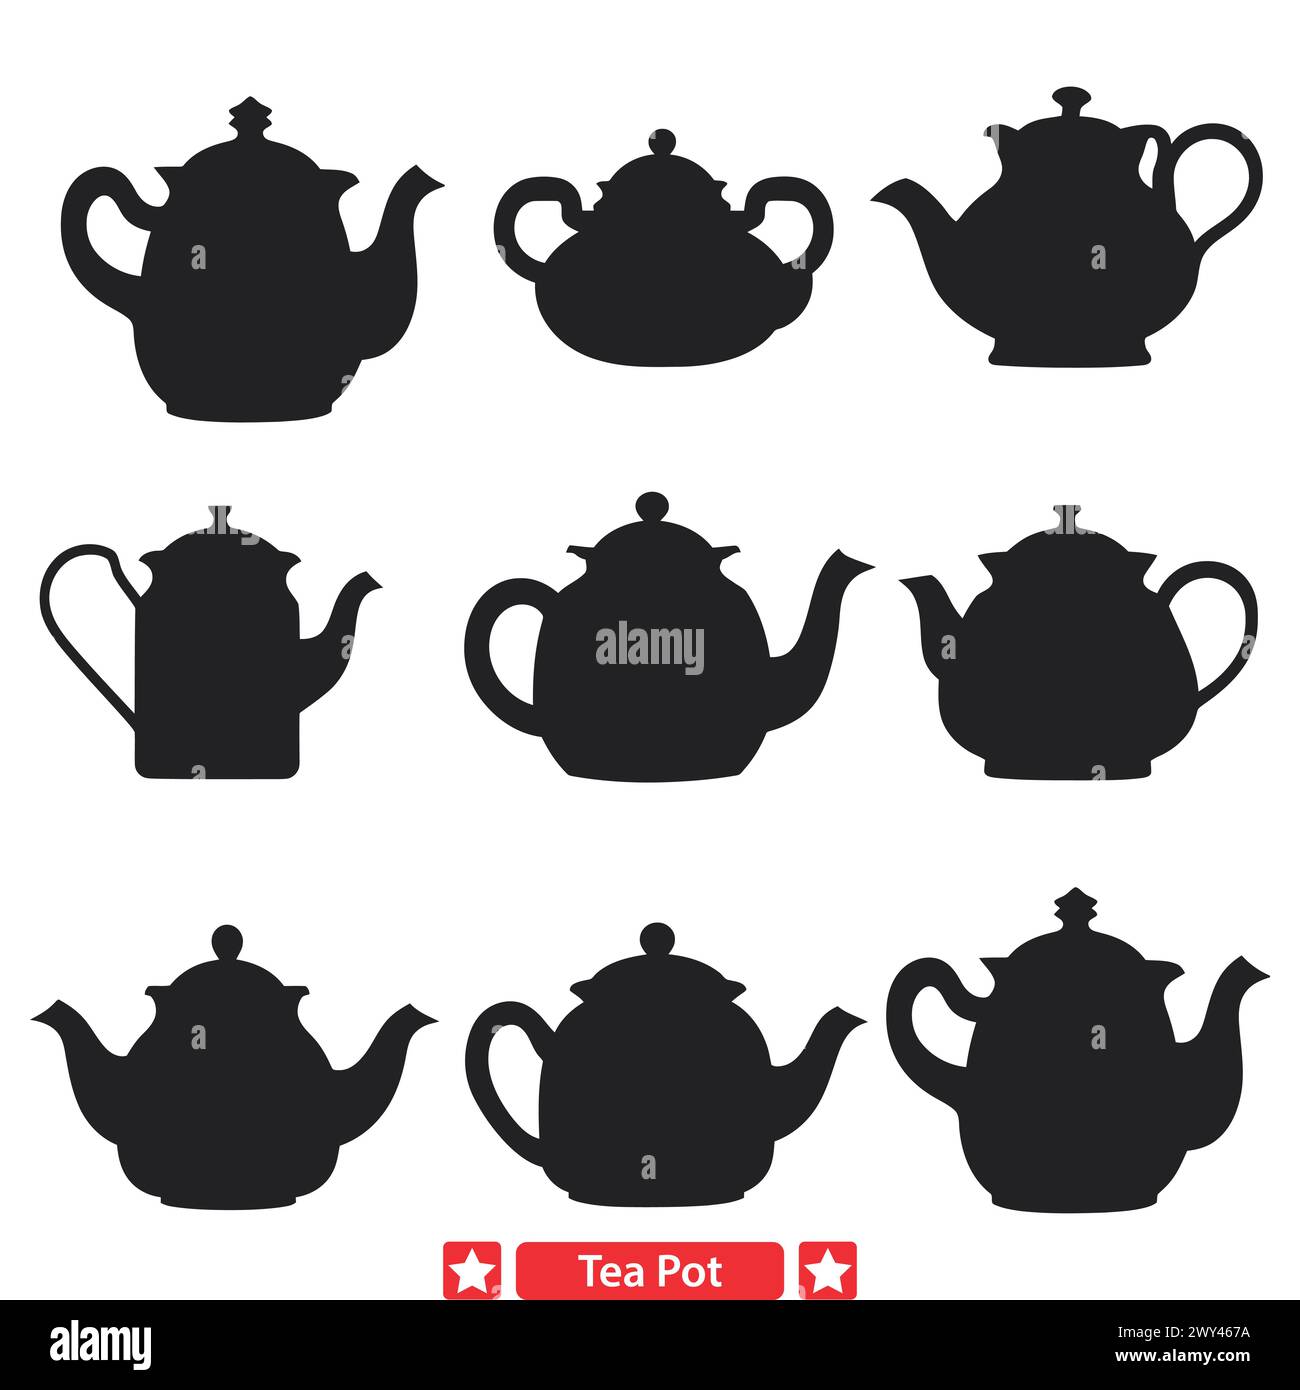 Quaint Tea Pot Collection  Vintage Inspired Vector Silhouettes Stock Vector